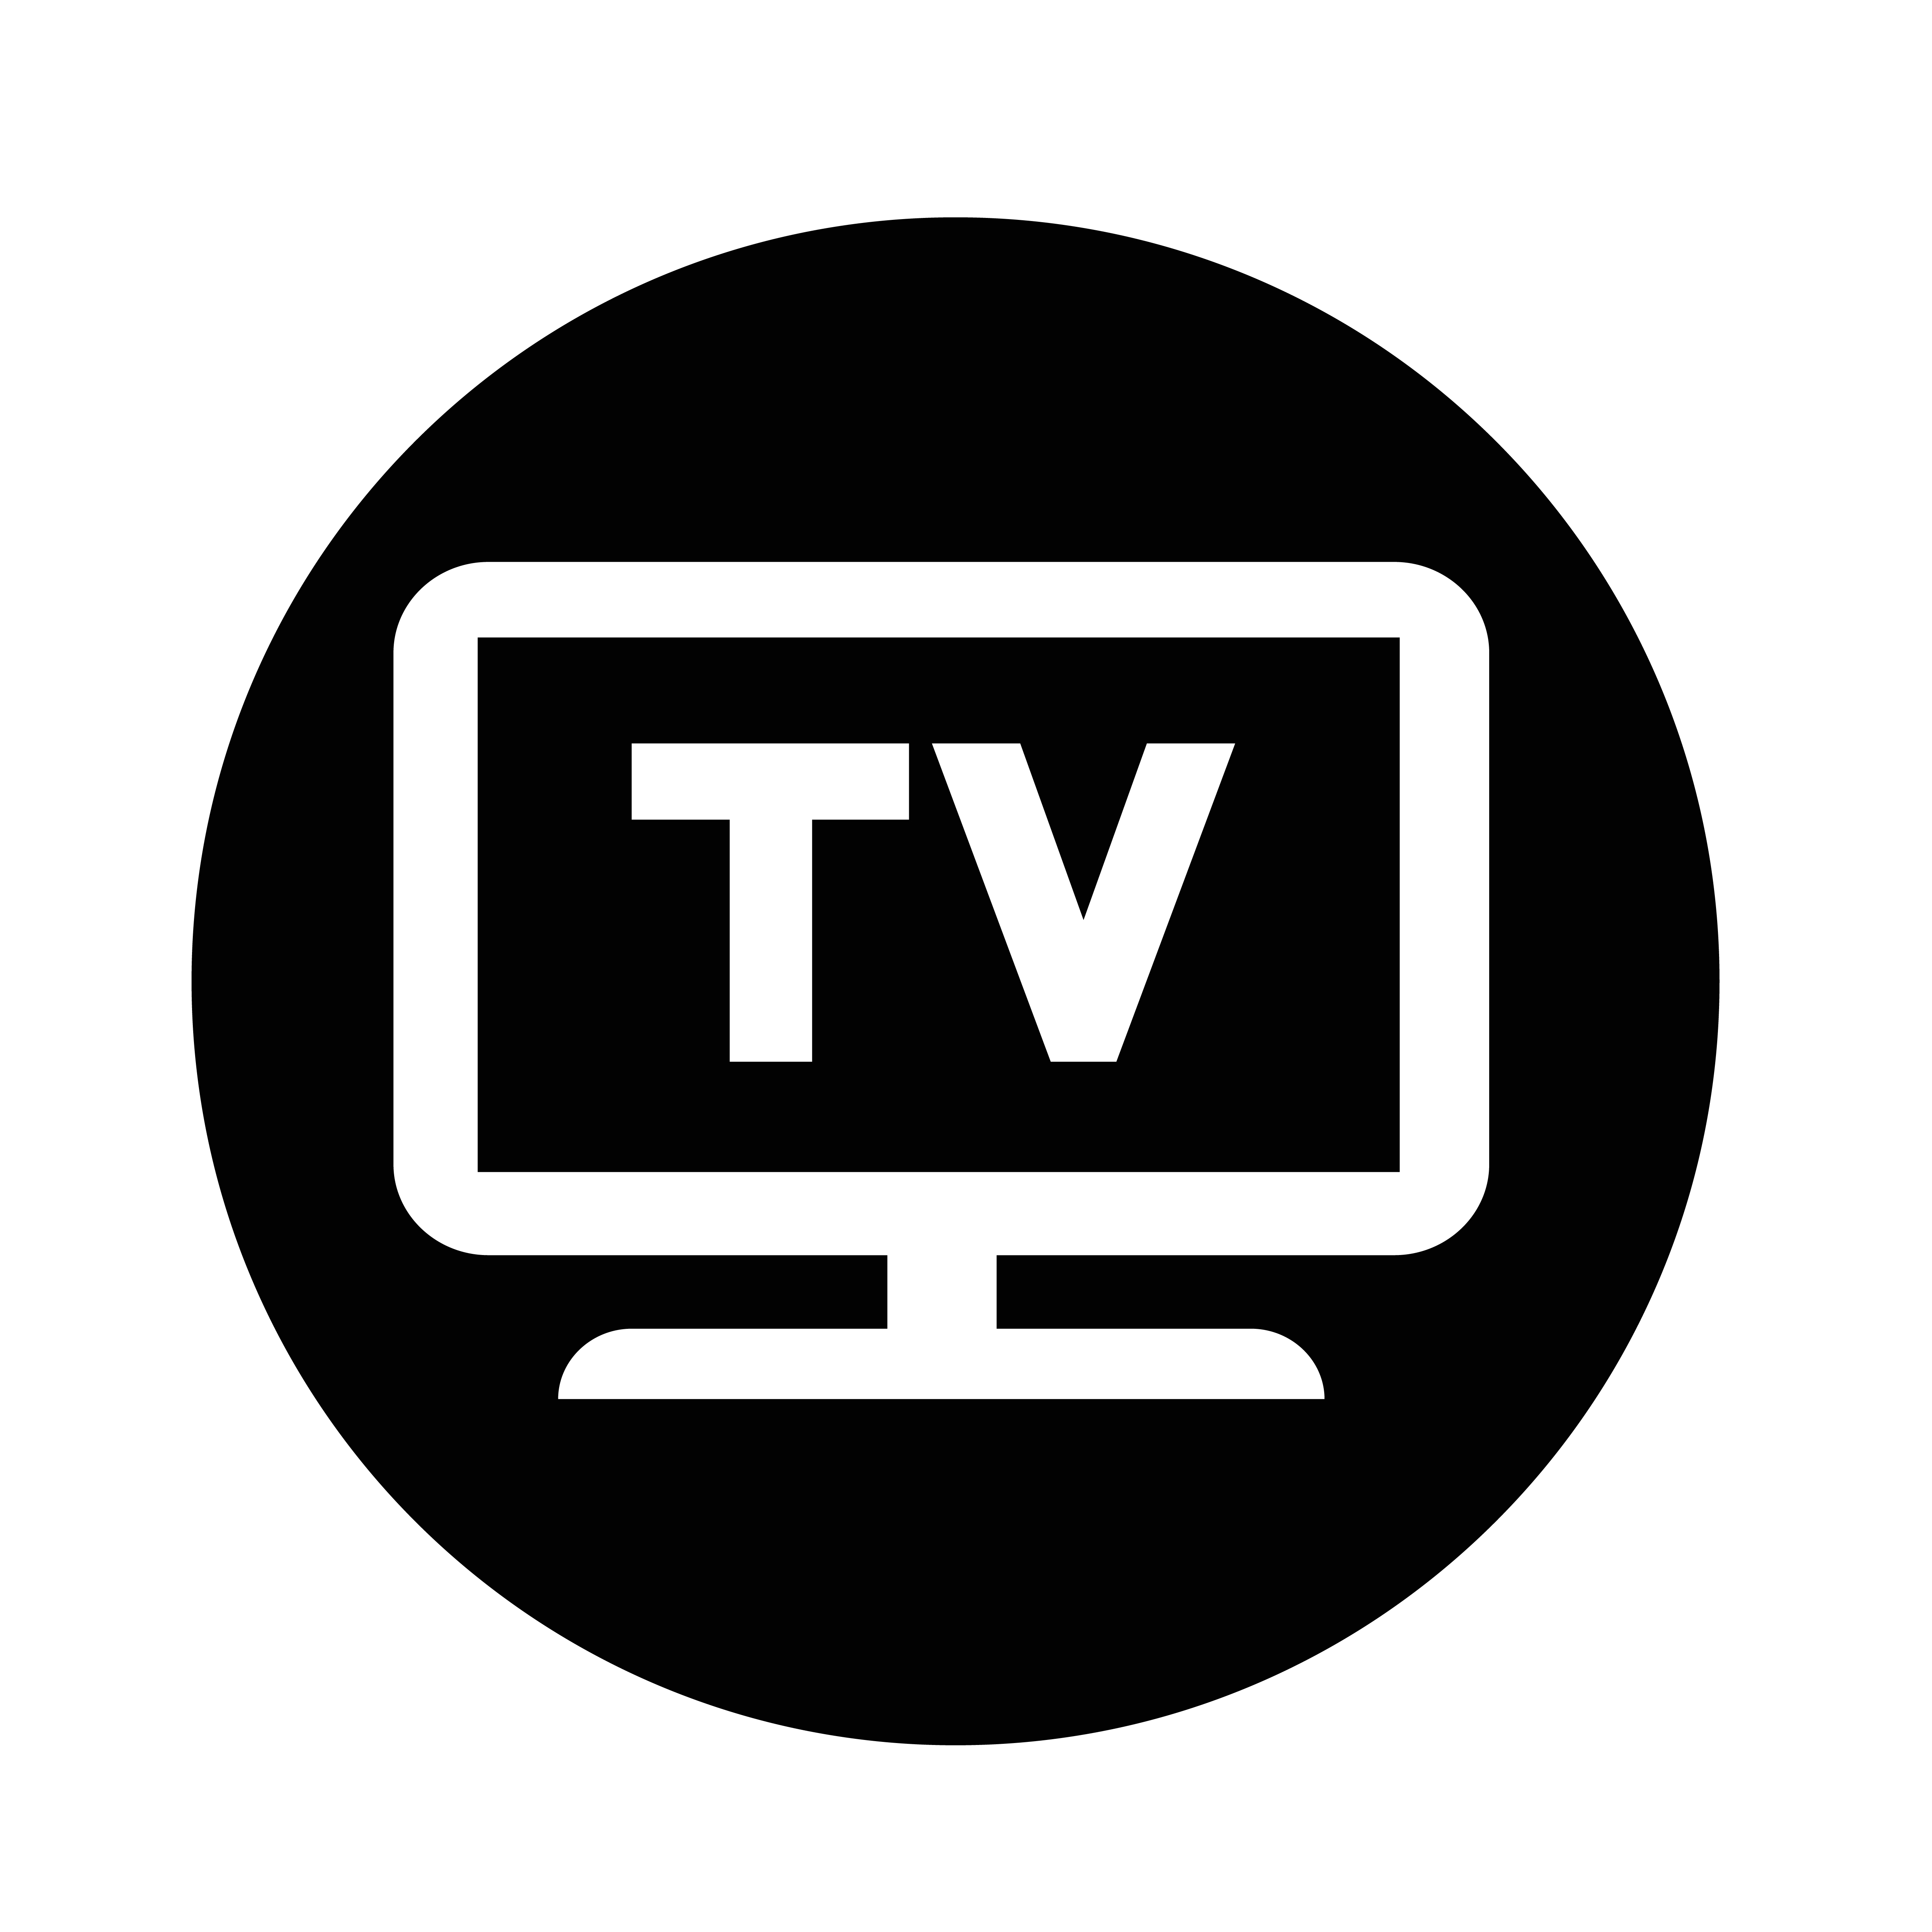 Тиксайн тв. "Значок ""TV""". Телевизор иконка. Пиктограмма телевизор. Телевизор логотип.